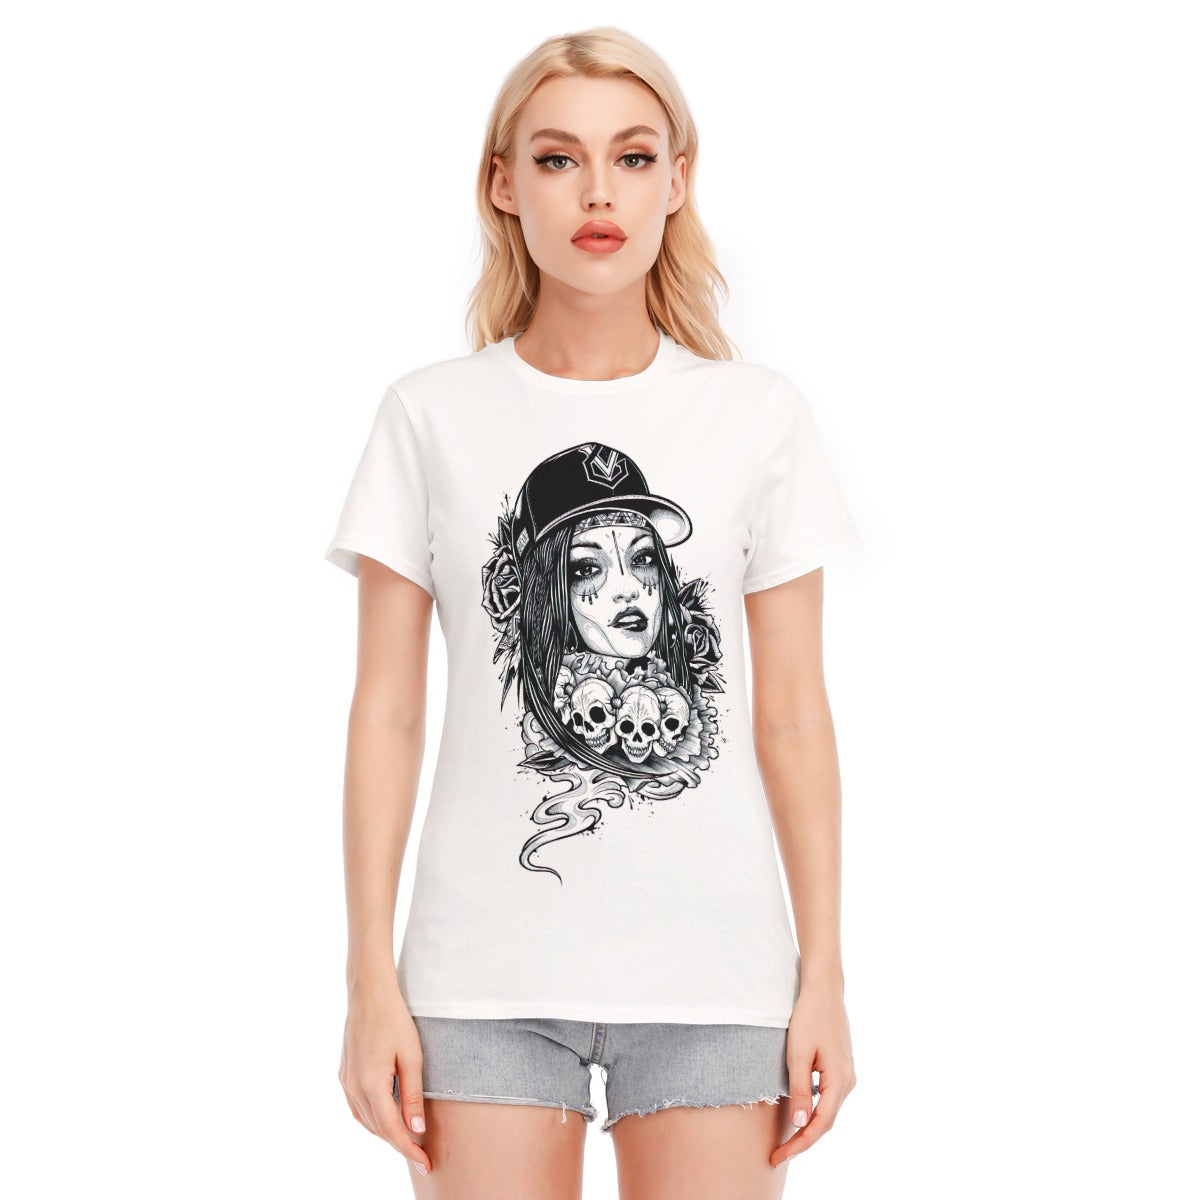 Skulls with Girl Women's T-Shirt (100% Cotton) - T0221